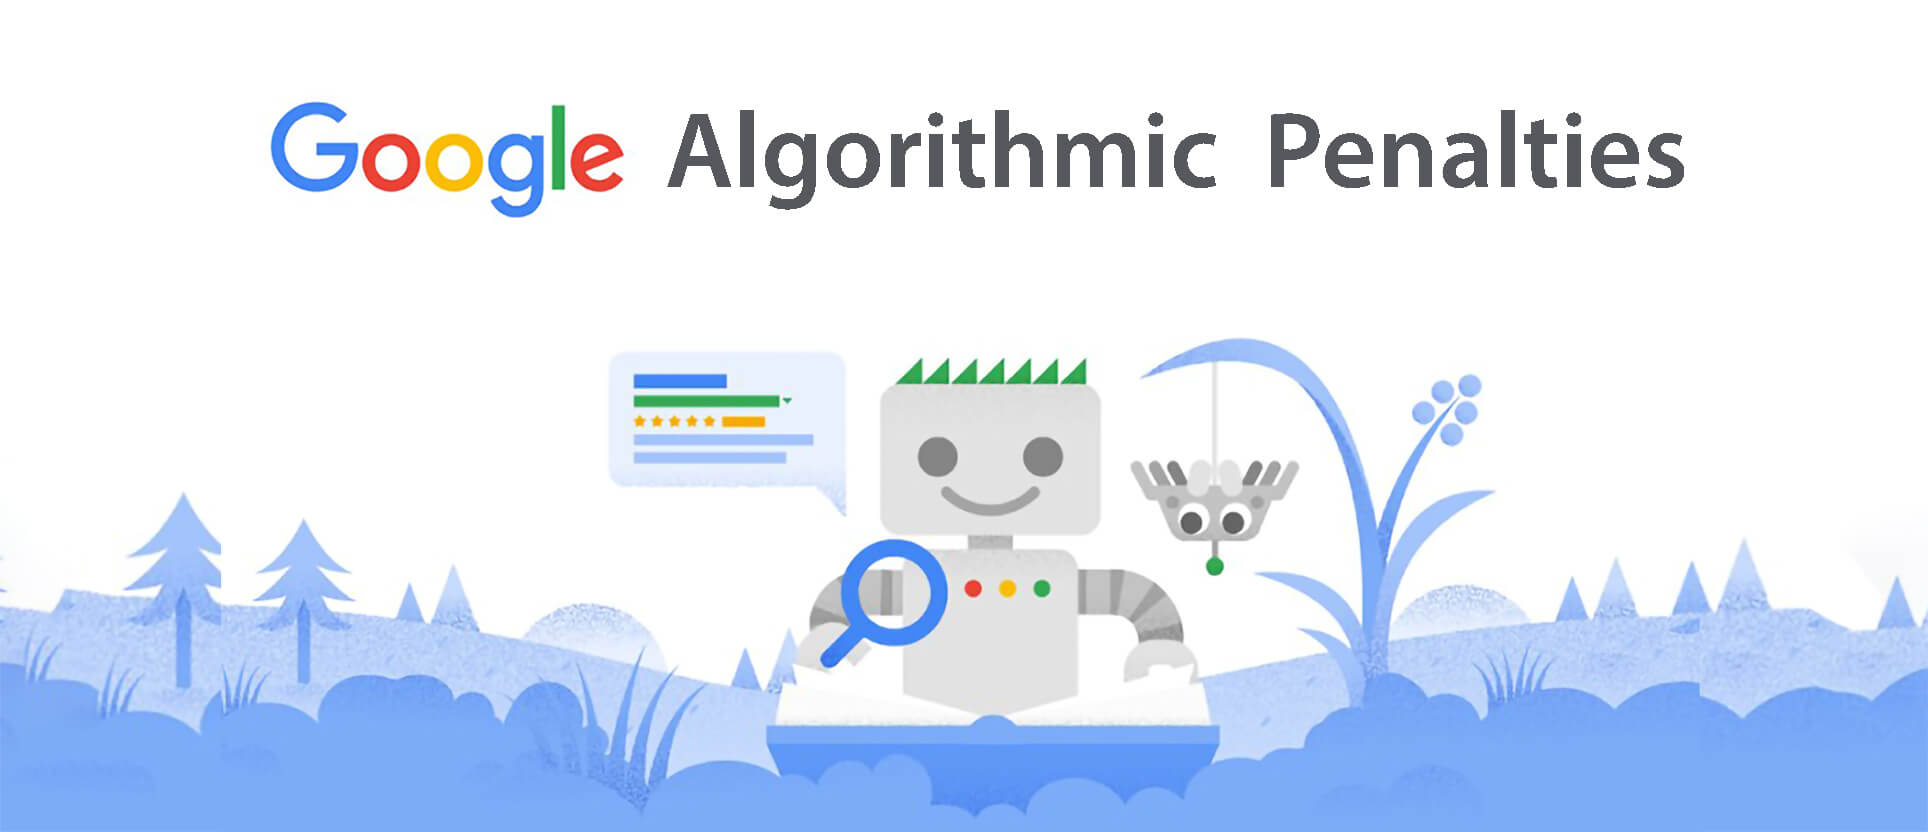 Google Algorithmic Penalties